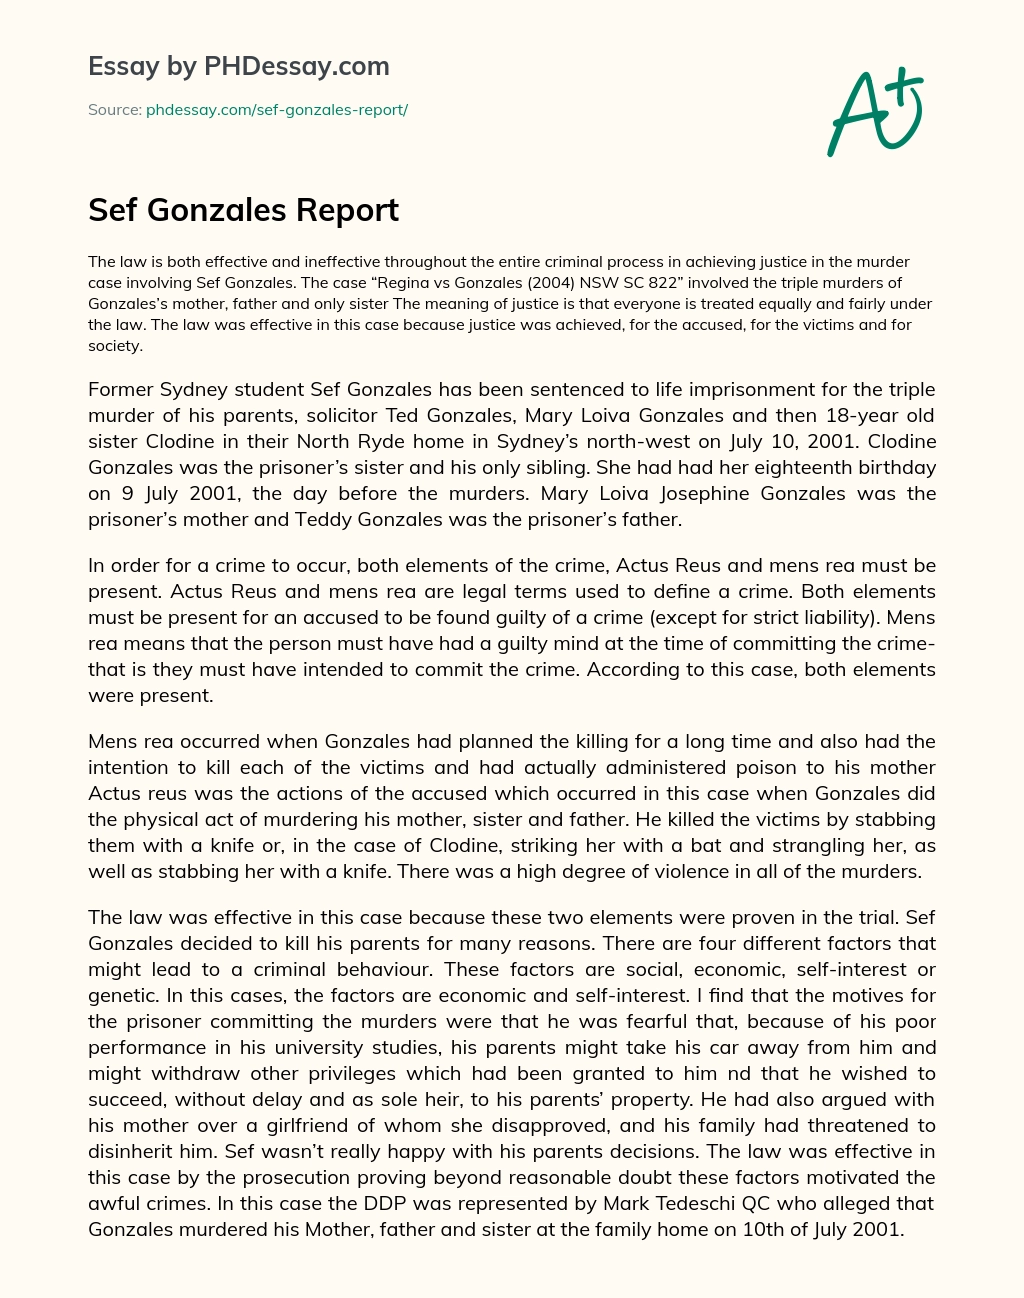 Sef Gonzales Report essay